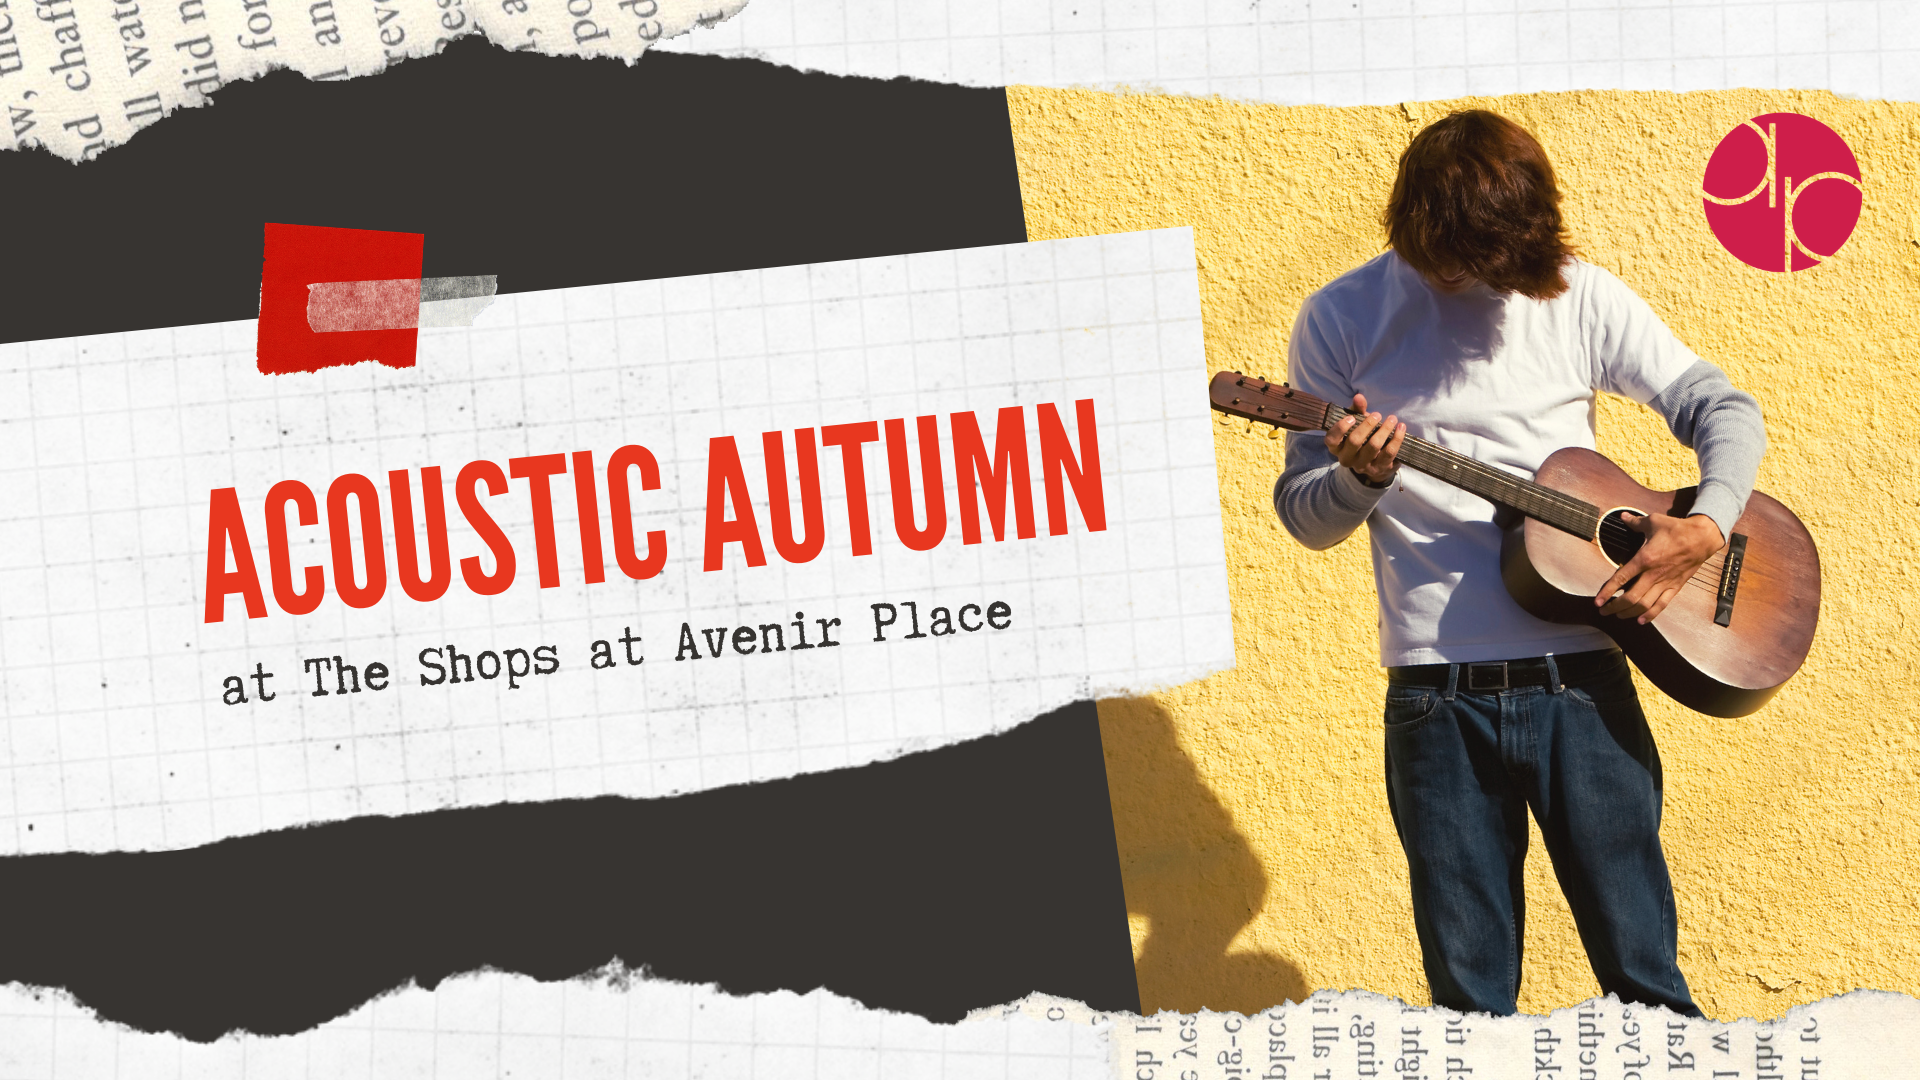 Acoustic Autumn at The Shops at Avenir Place